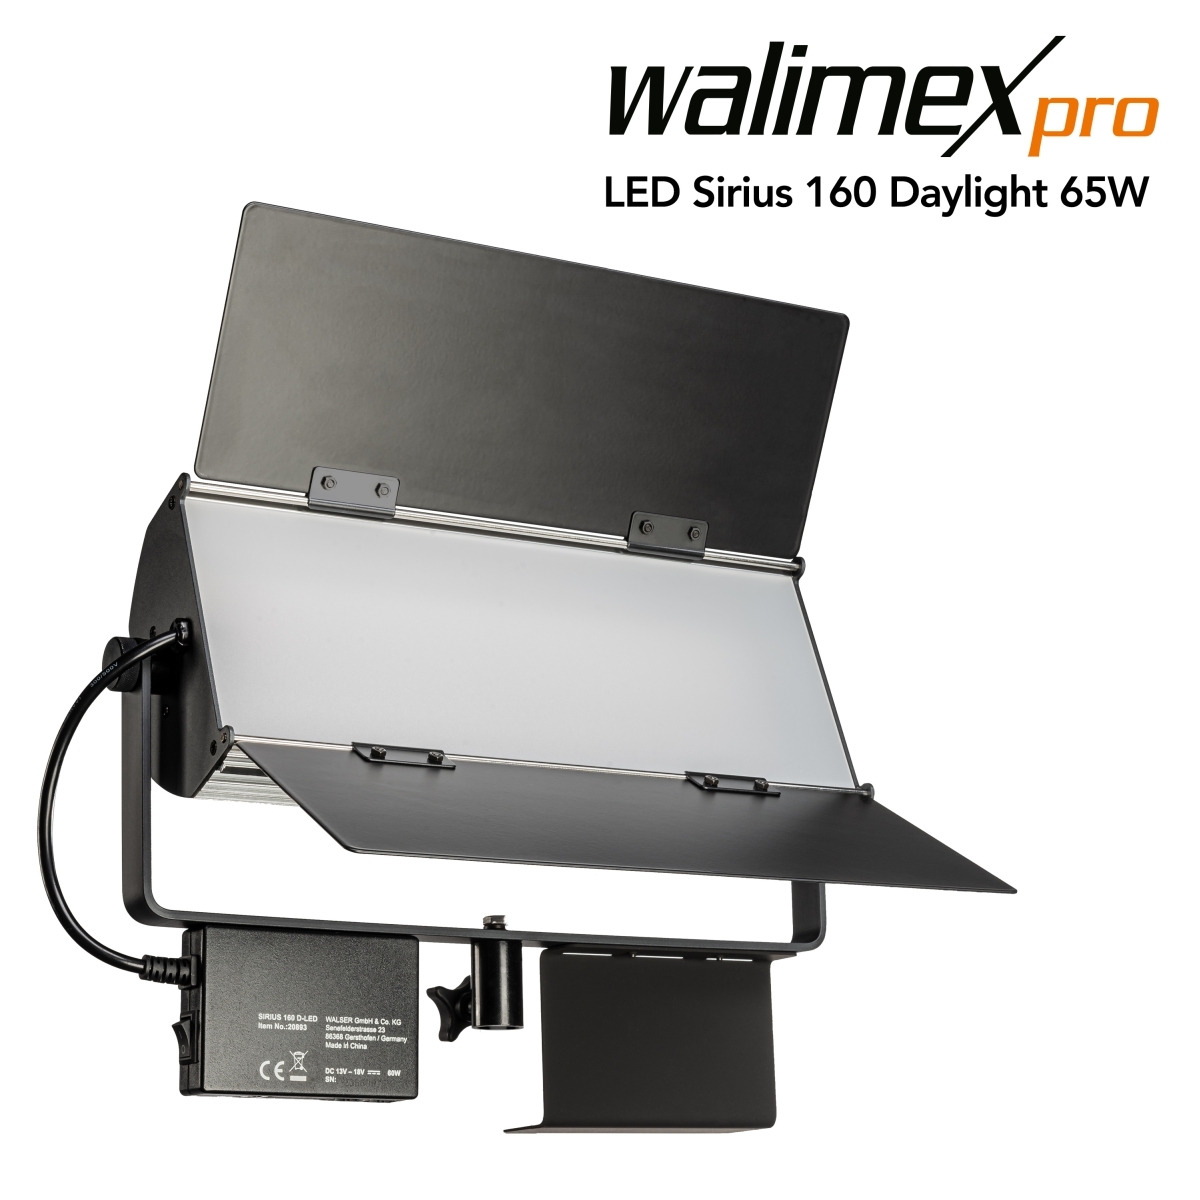 Walimex pro LED Sirius 160 Daylight 65W LED lampe de surface